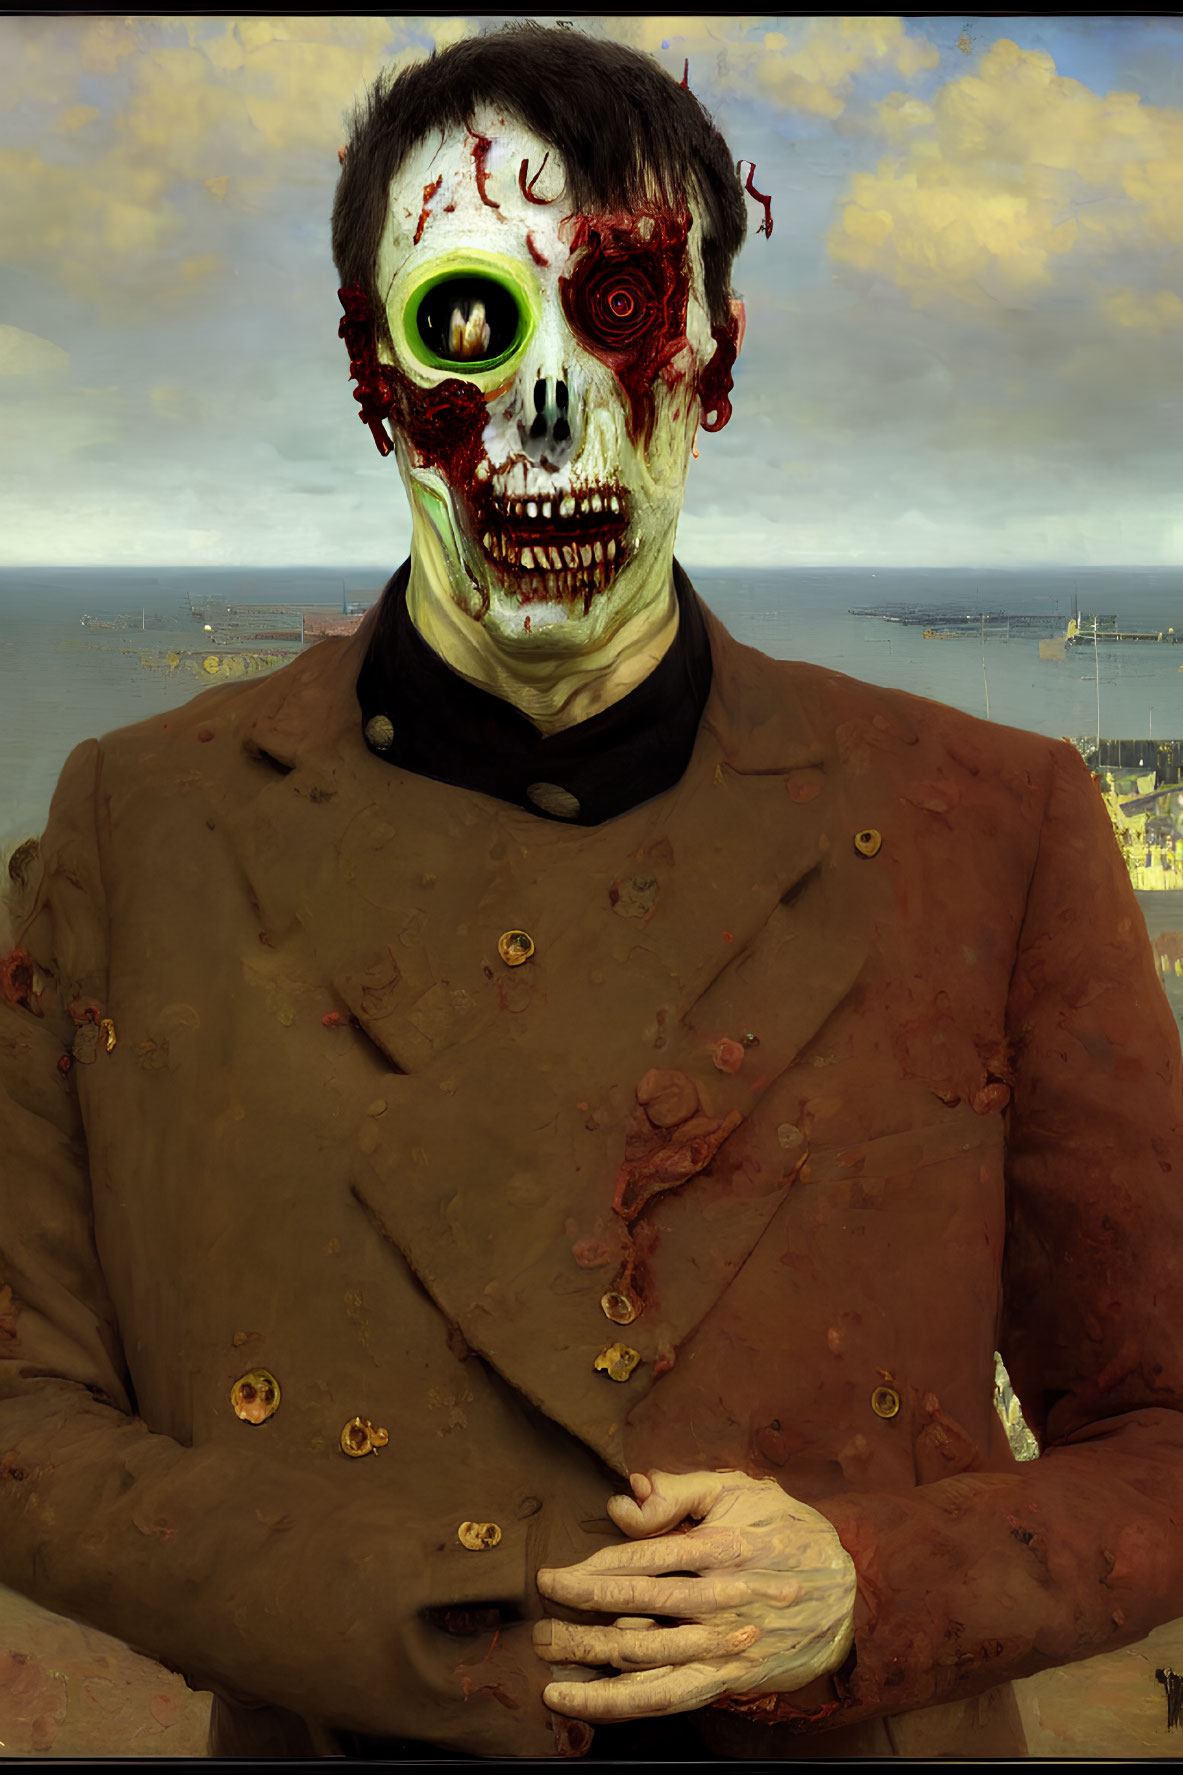 billionaire zombie with monocle